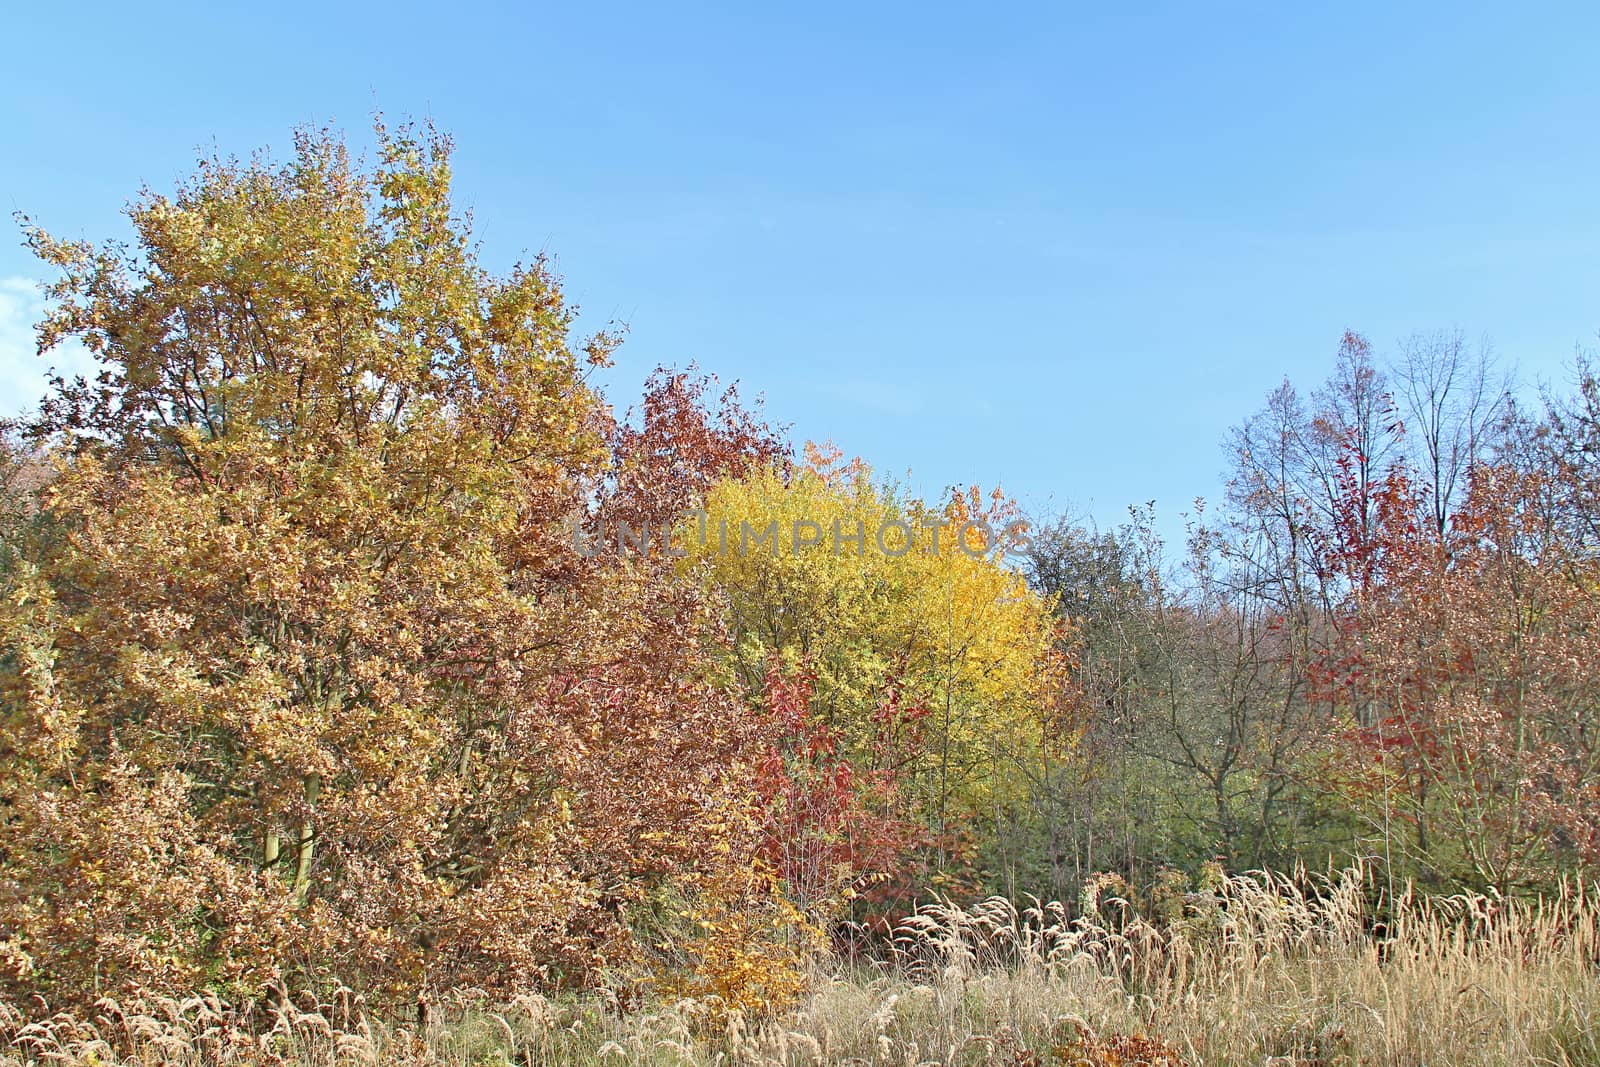 Autumn Colourful Leafs by Dermot68